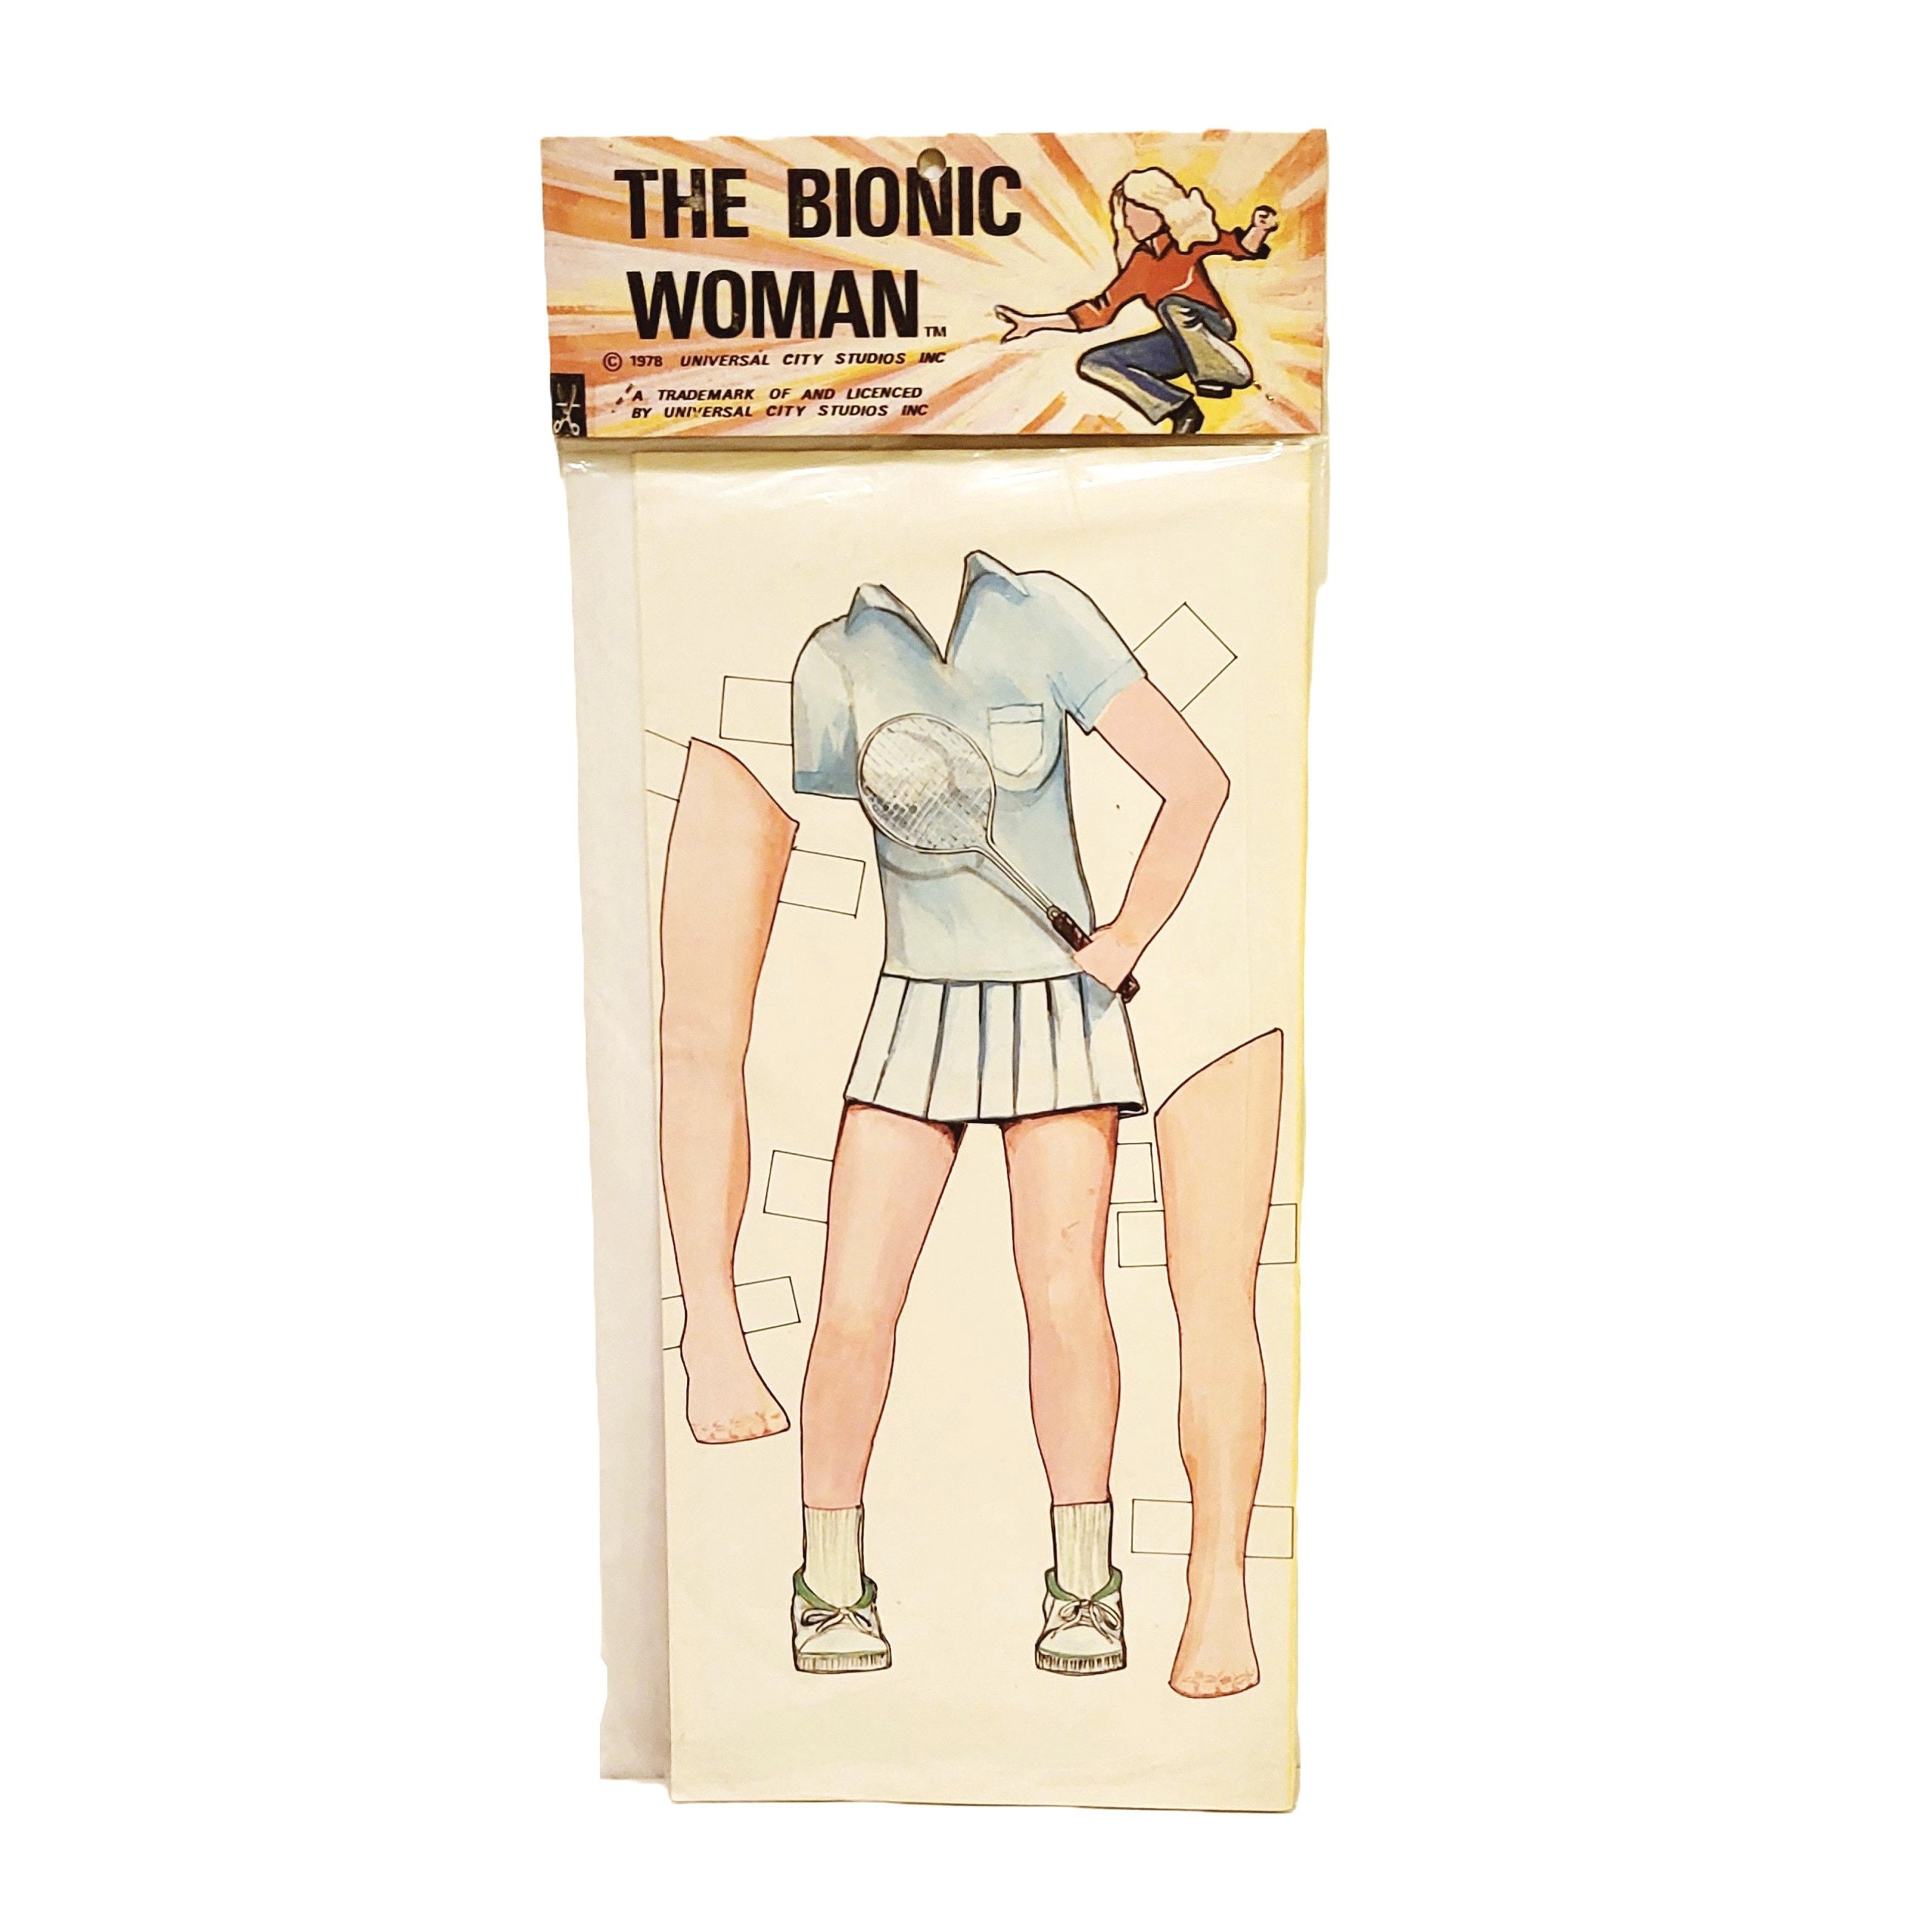 Some for daytime activities  Bionic woman, Bionic, Childhood memories  70s